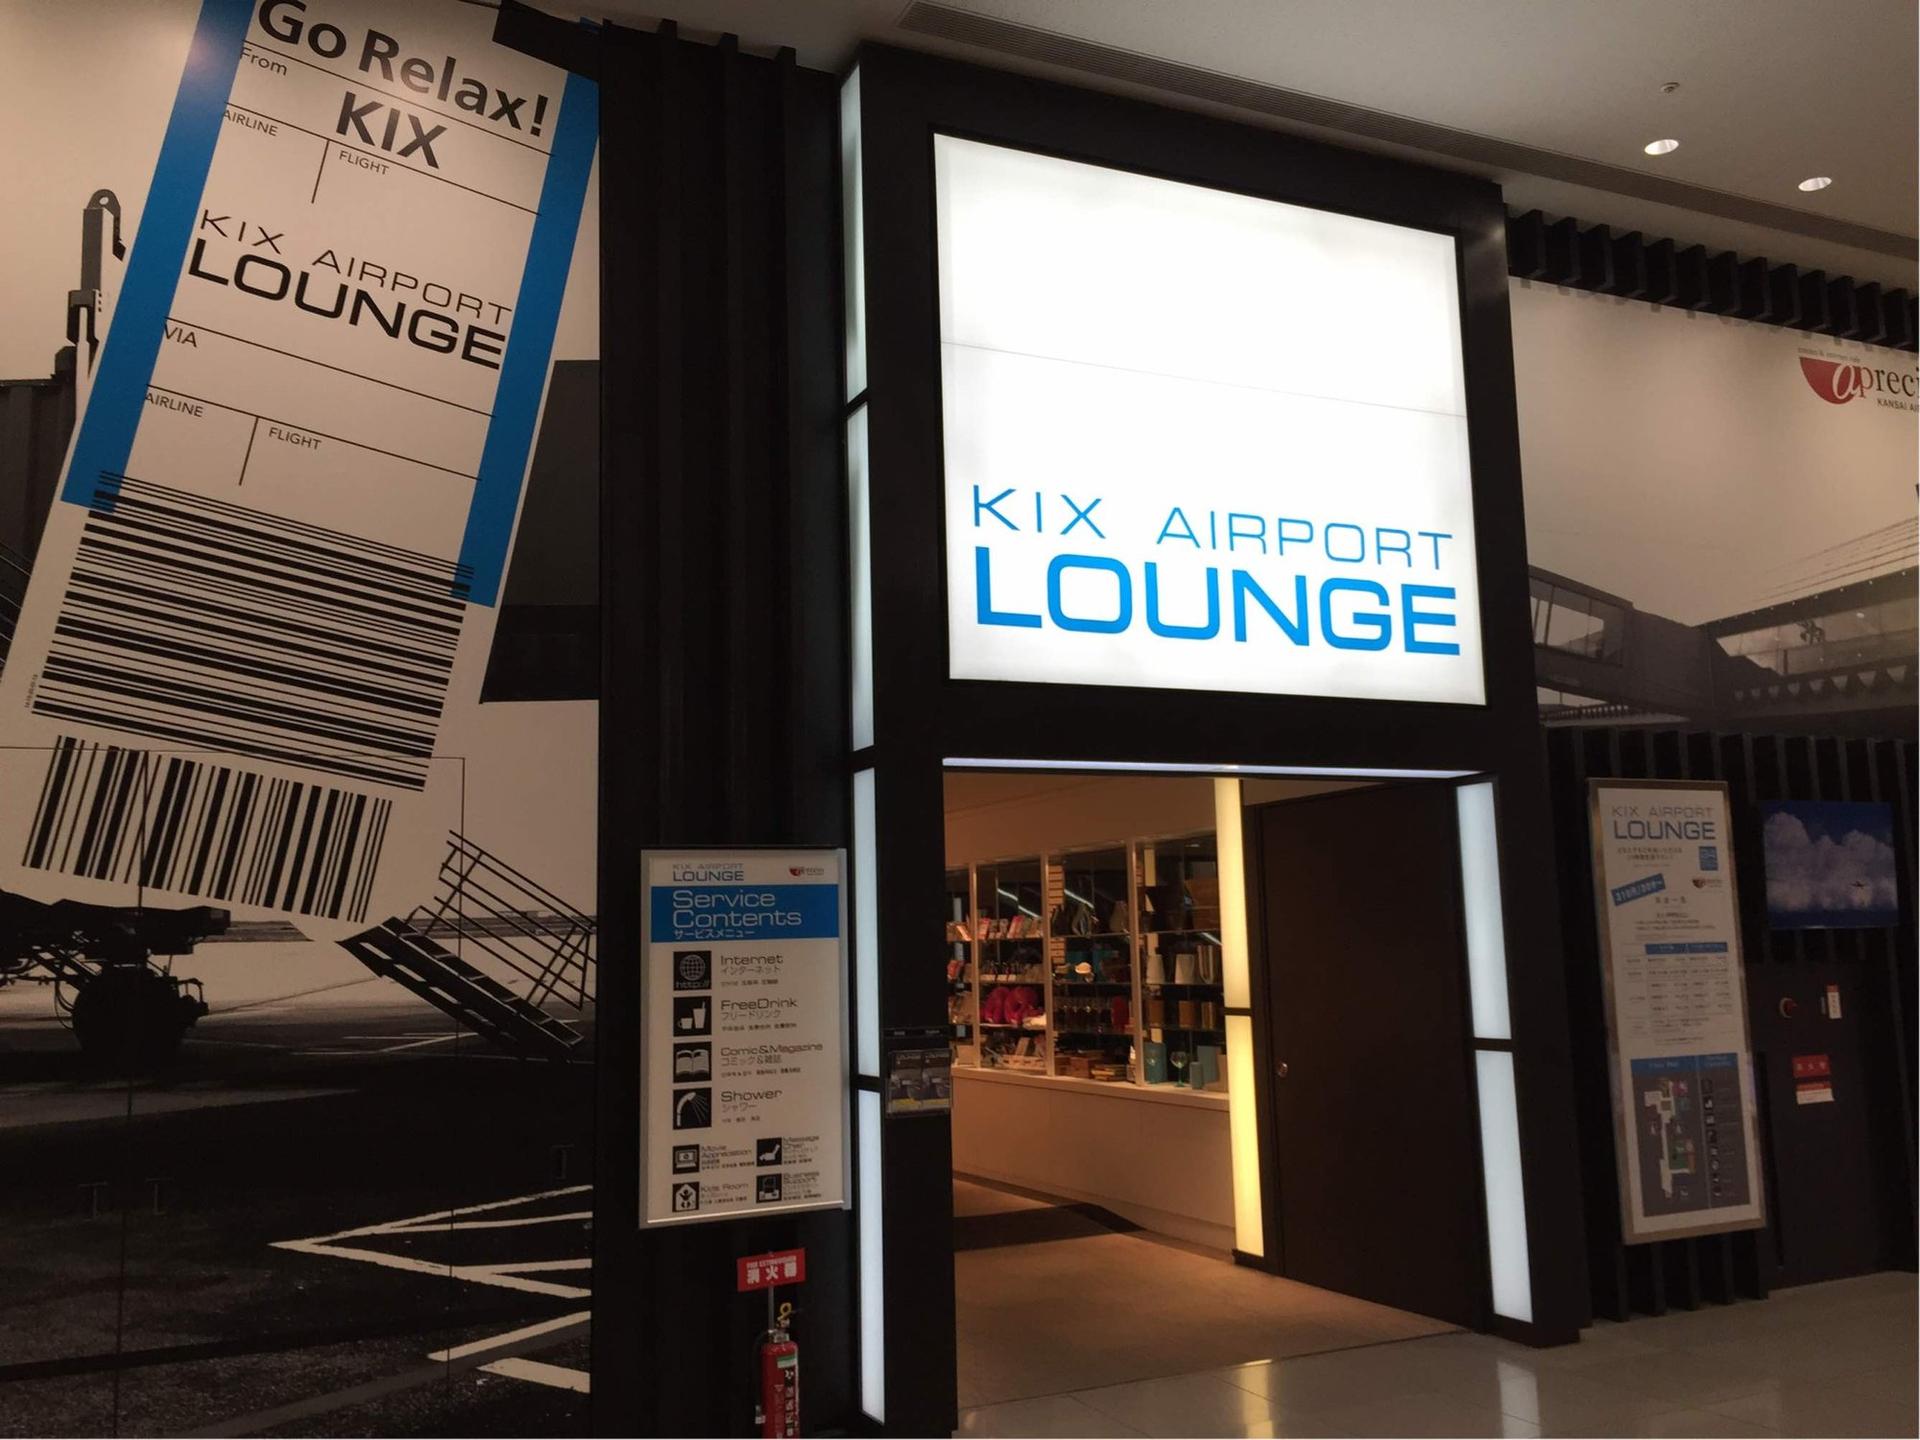 KIX Airport Lounge image 3 of 32